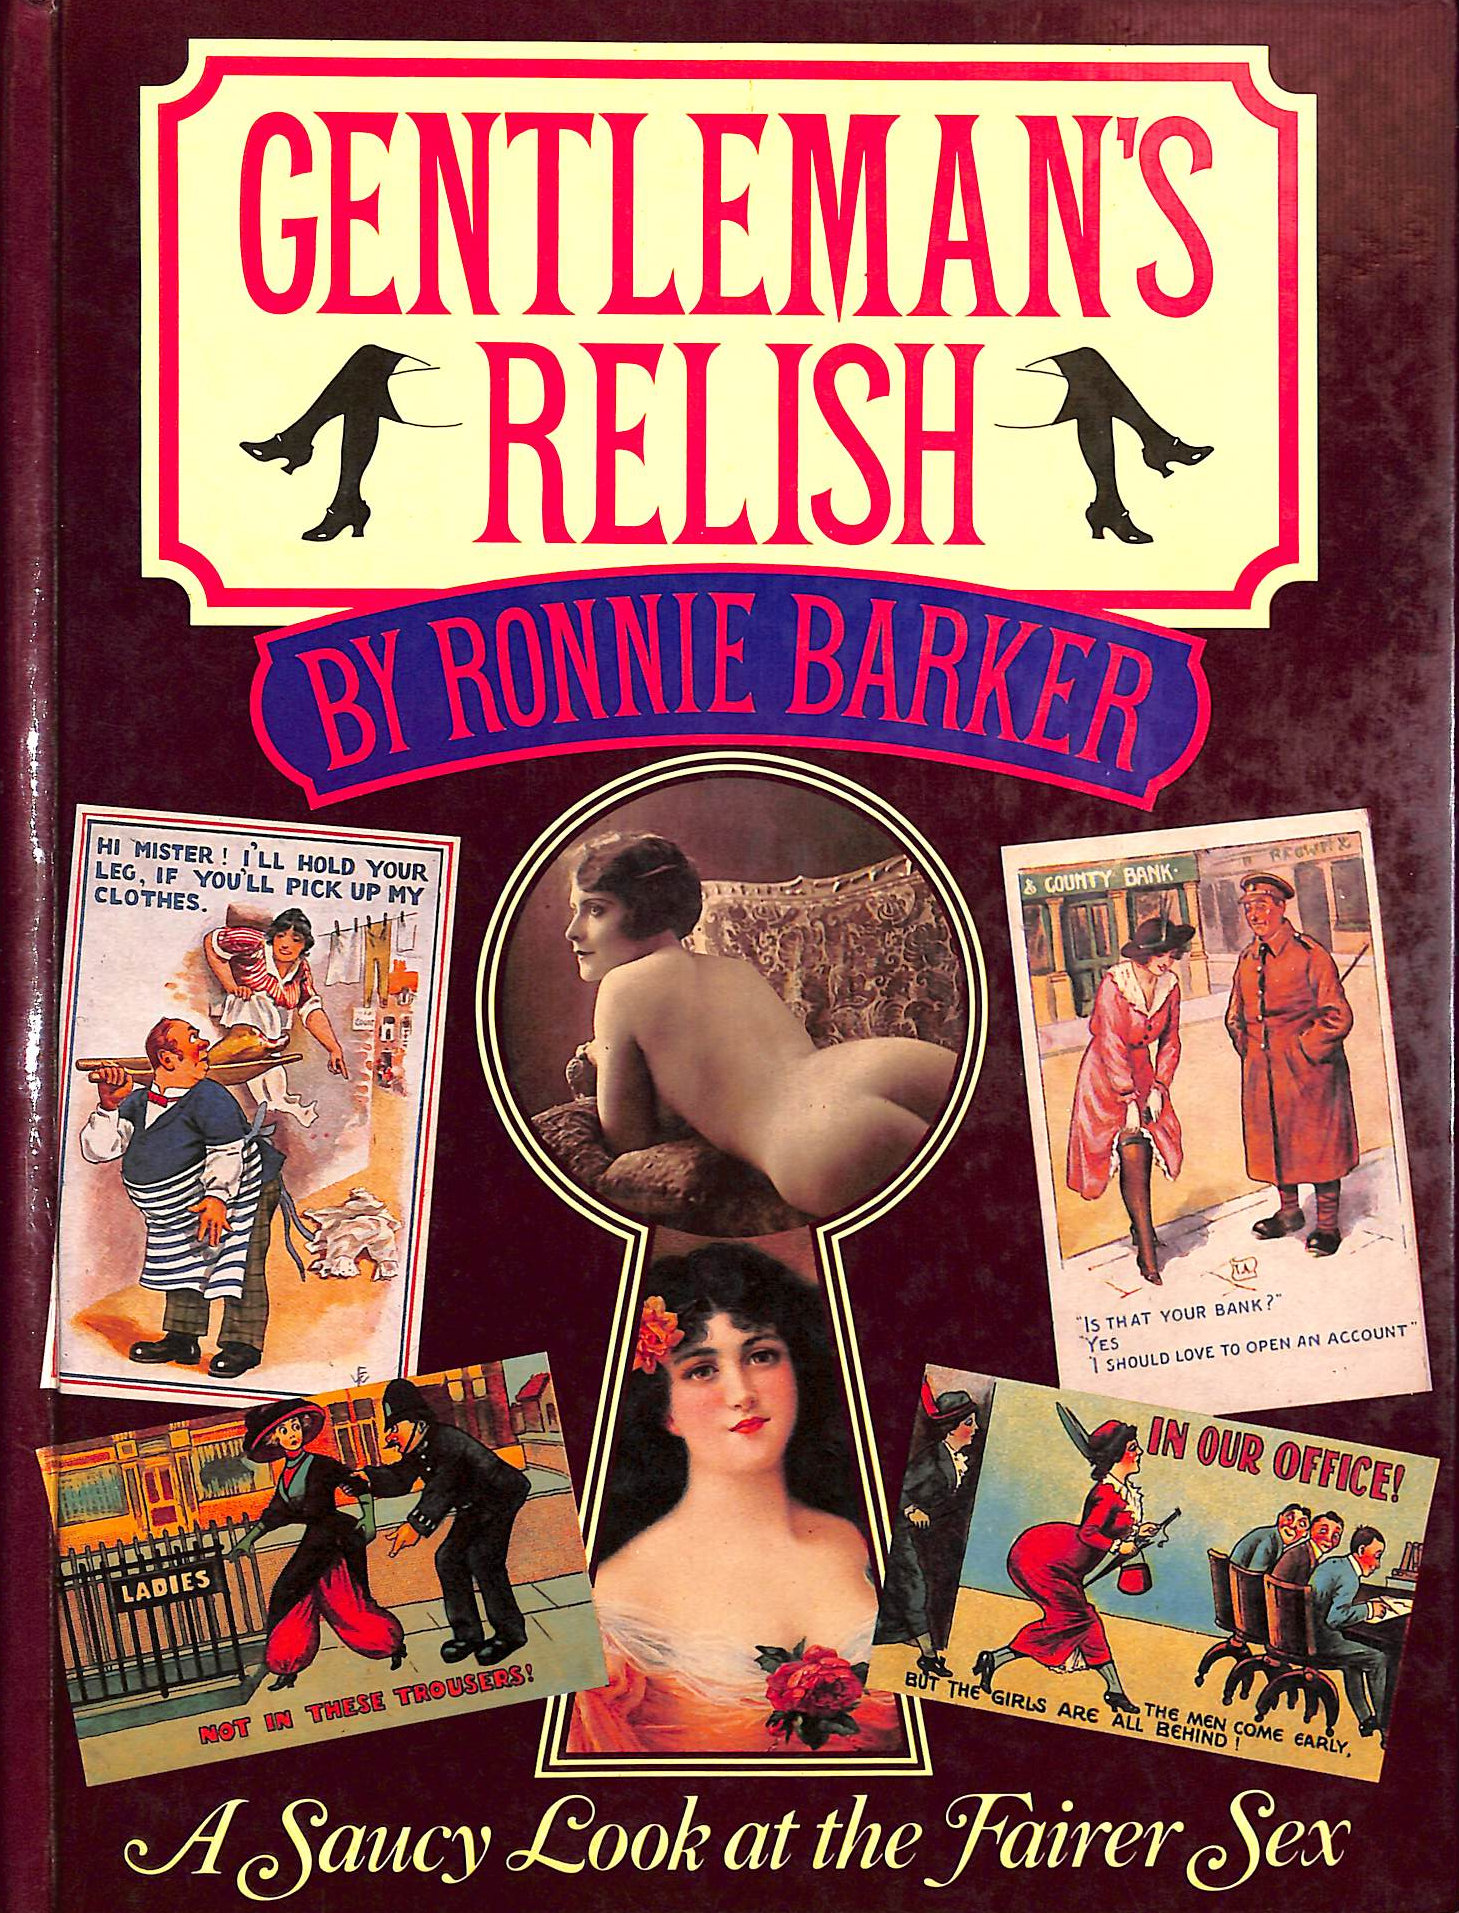 BARKER, RONNIE - Gentleman's Relish